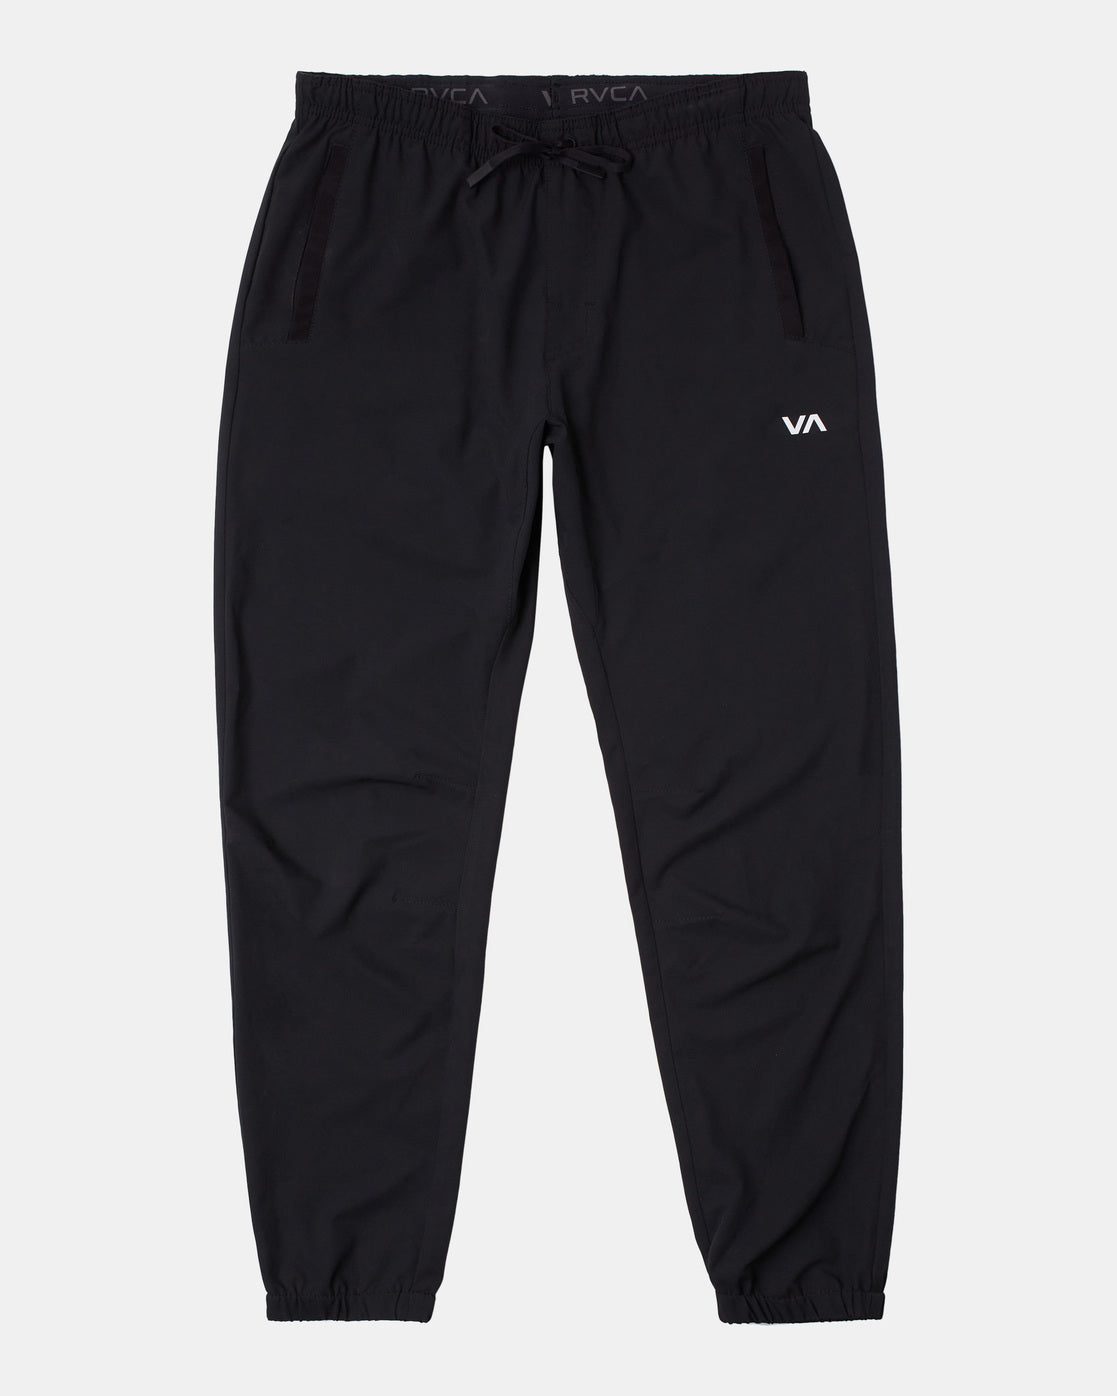 Adidas jagger pants cotton unisex black, Men's Fashion, Bottoms, Joggers on  Carousell